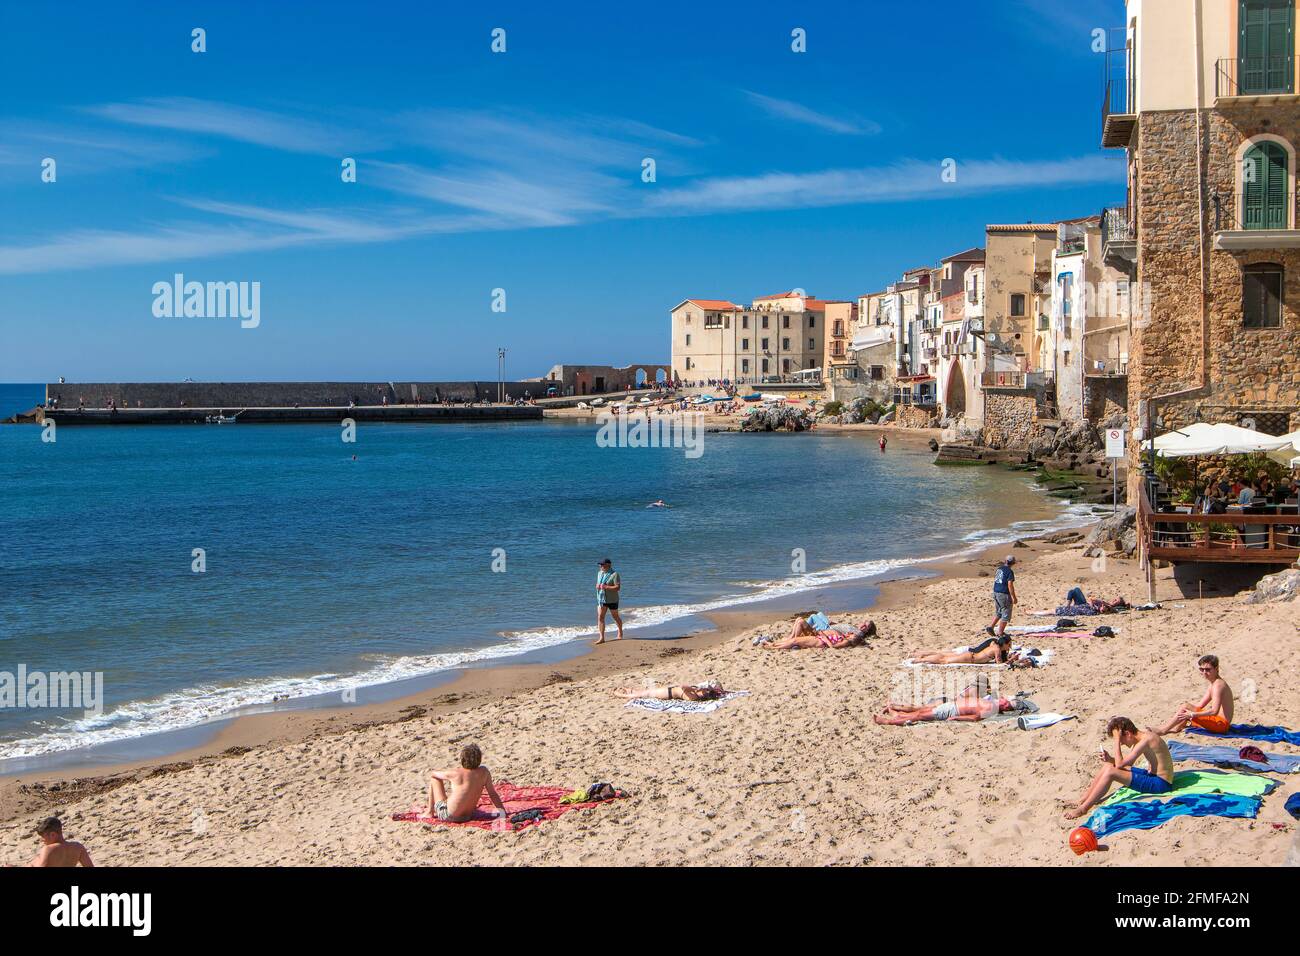 Italia, Sicilia, Cefalu, zona declarada Patrimonio de la Humanidad por la UNESCO Foto de stock